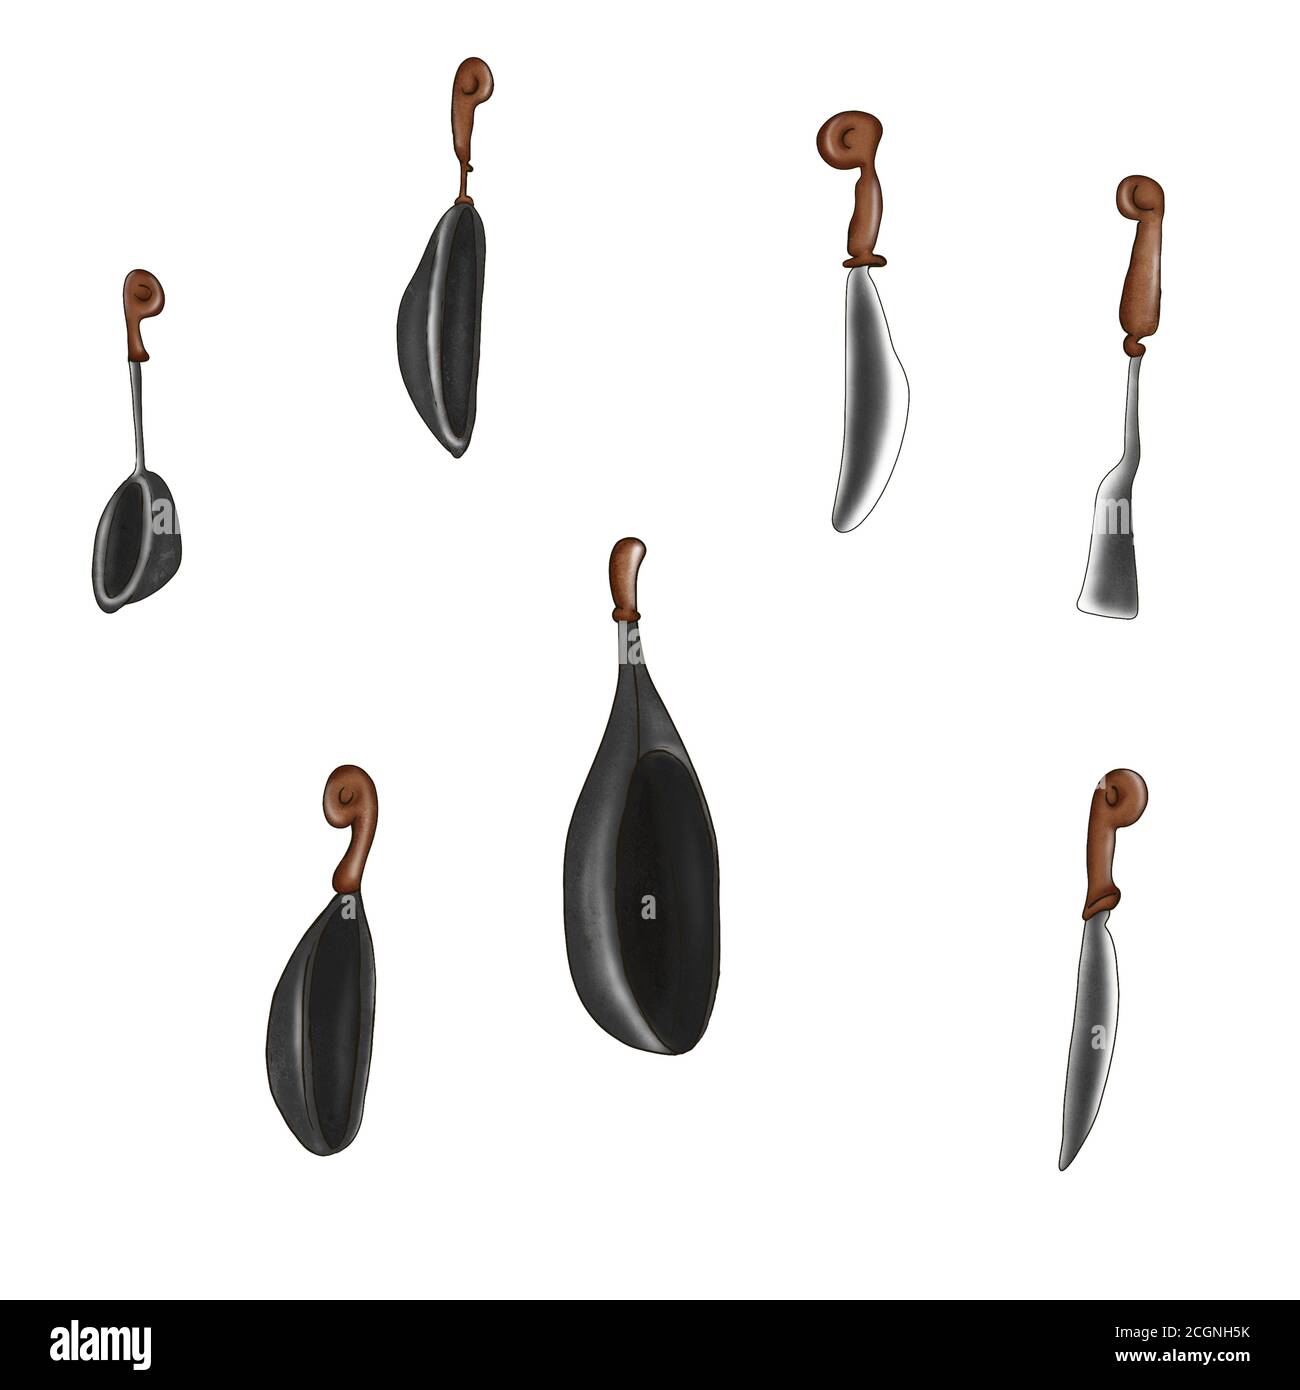 A set of kitchen utensils, knives, pans. Illustration on a white background.. Stock Photo